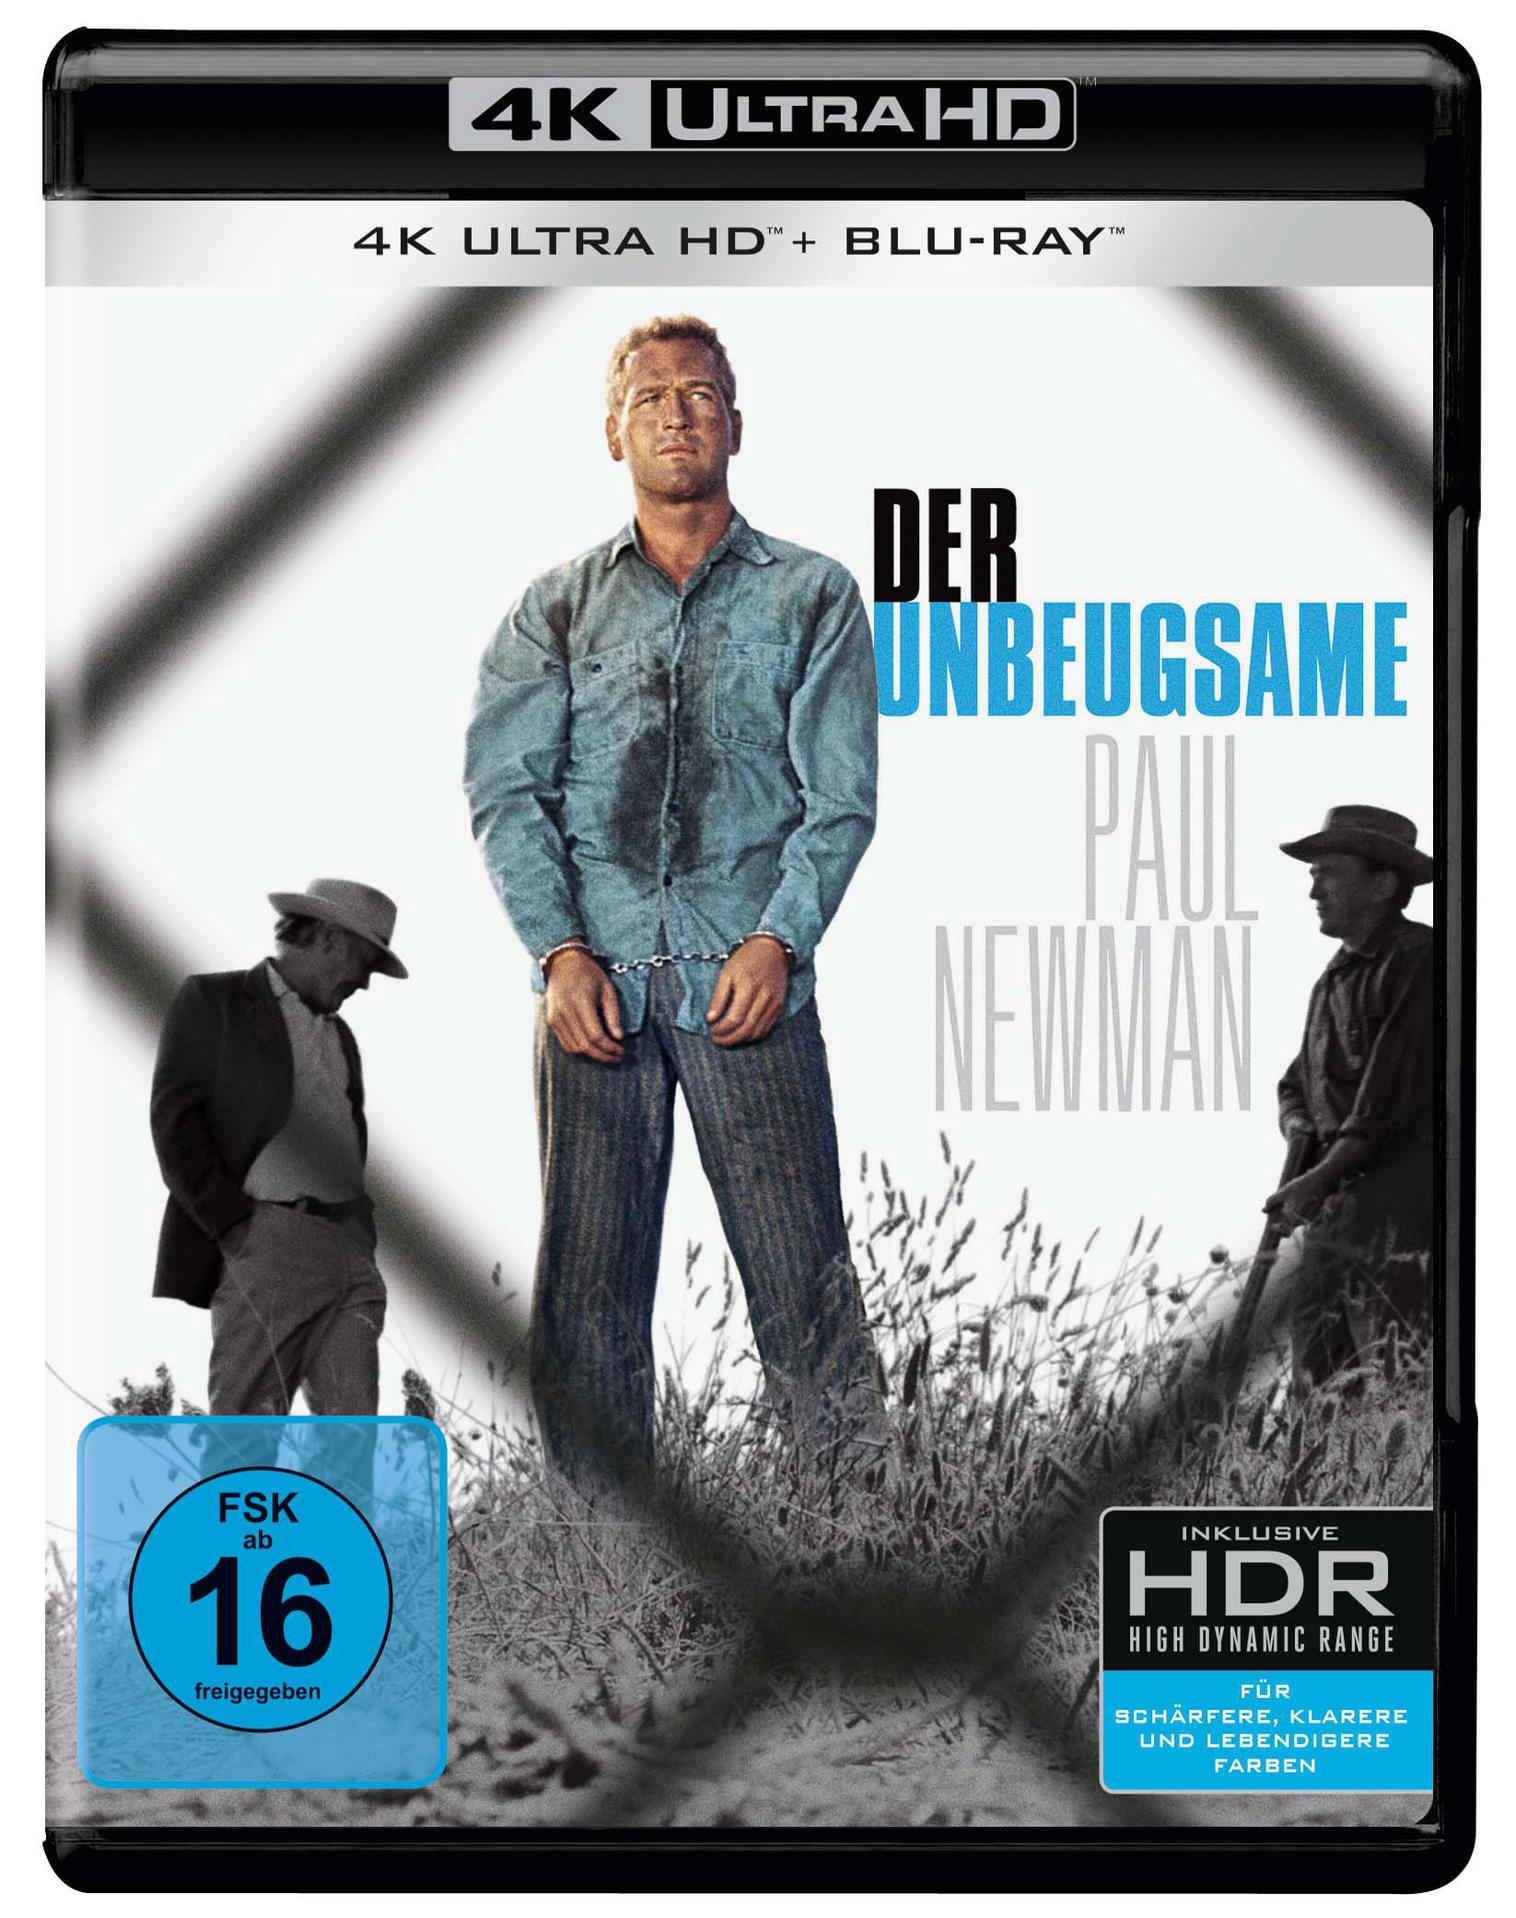 Blu-ray Blu-ray 4K Ultra Unbeugsame + Der HD